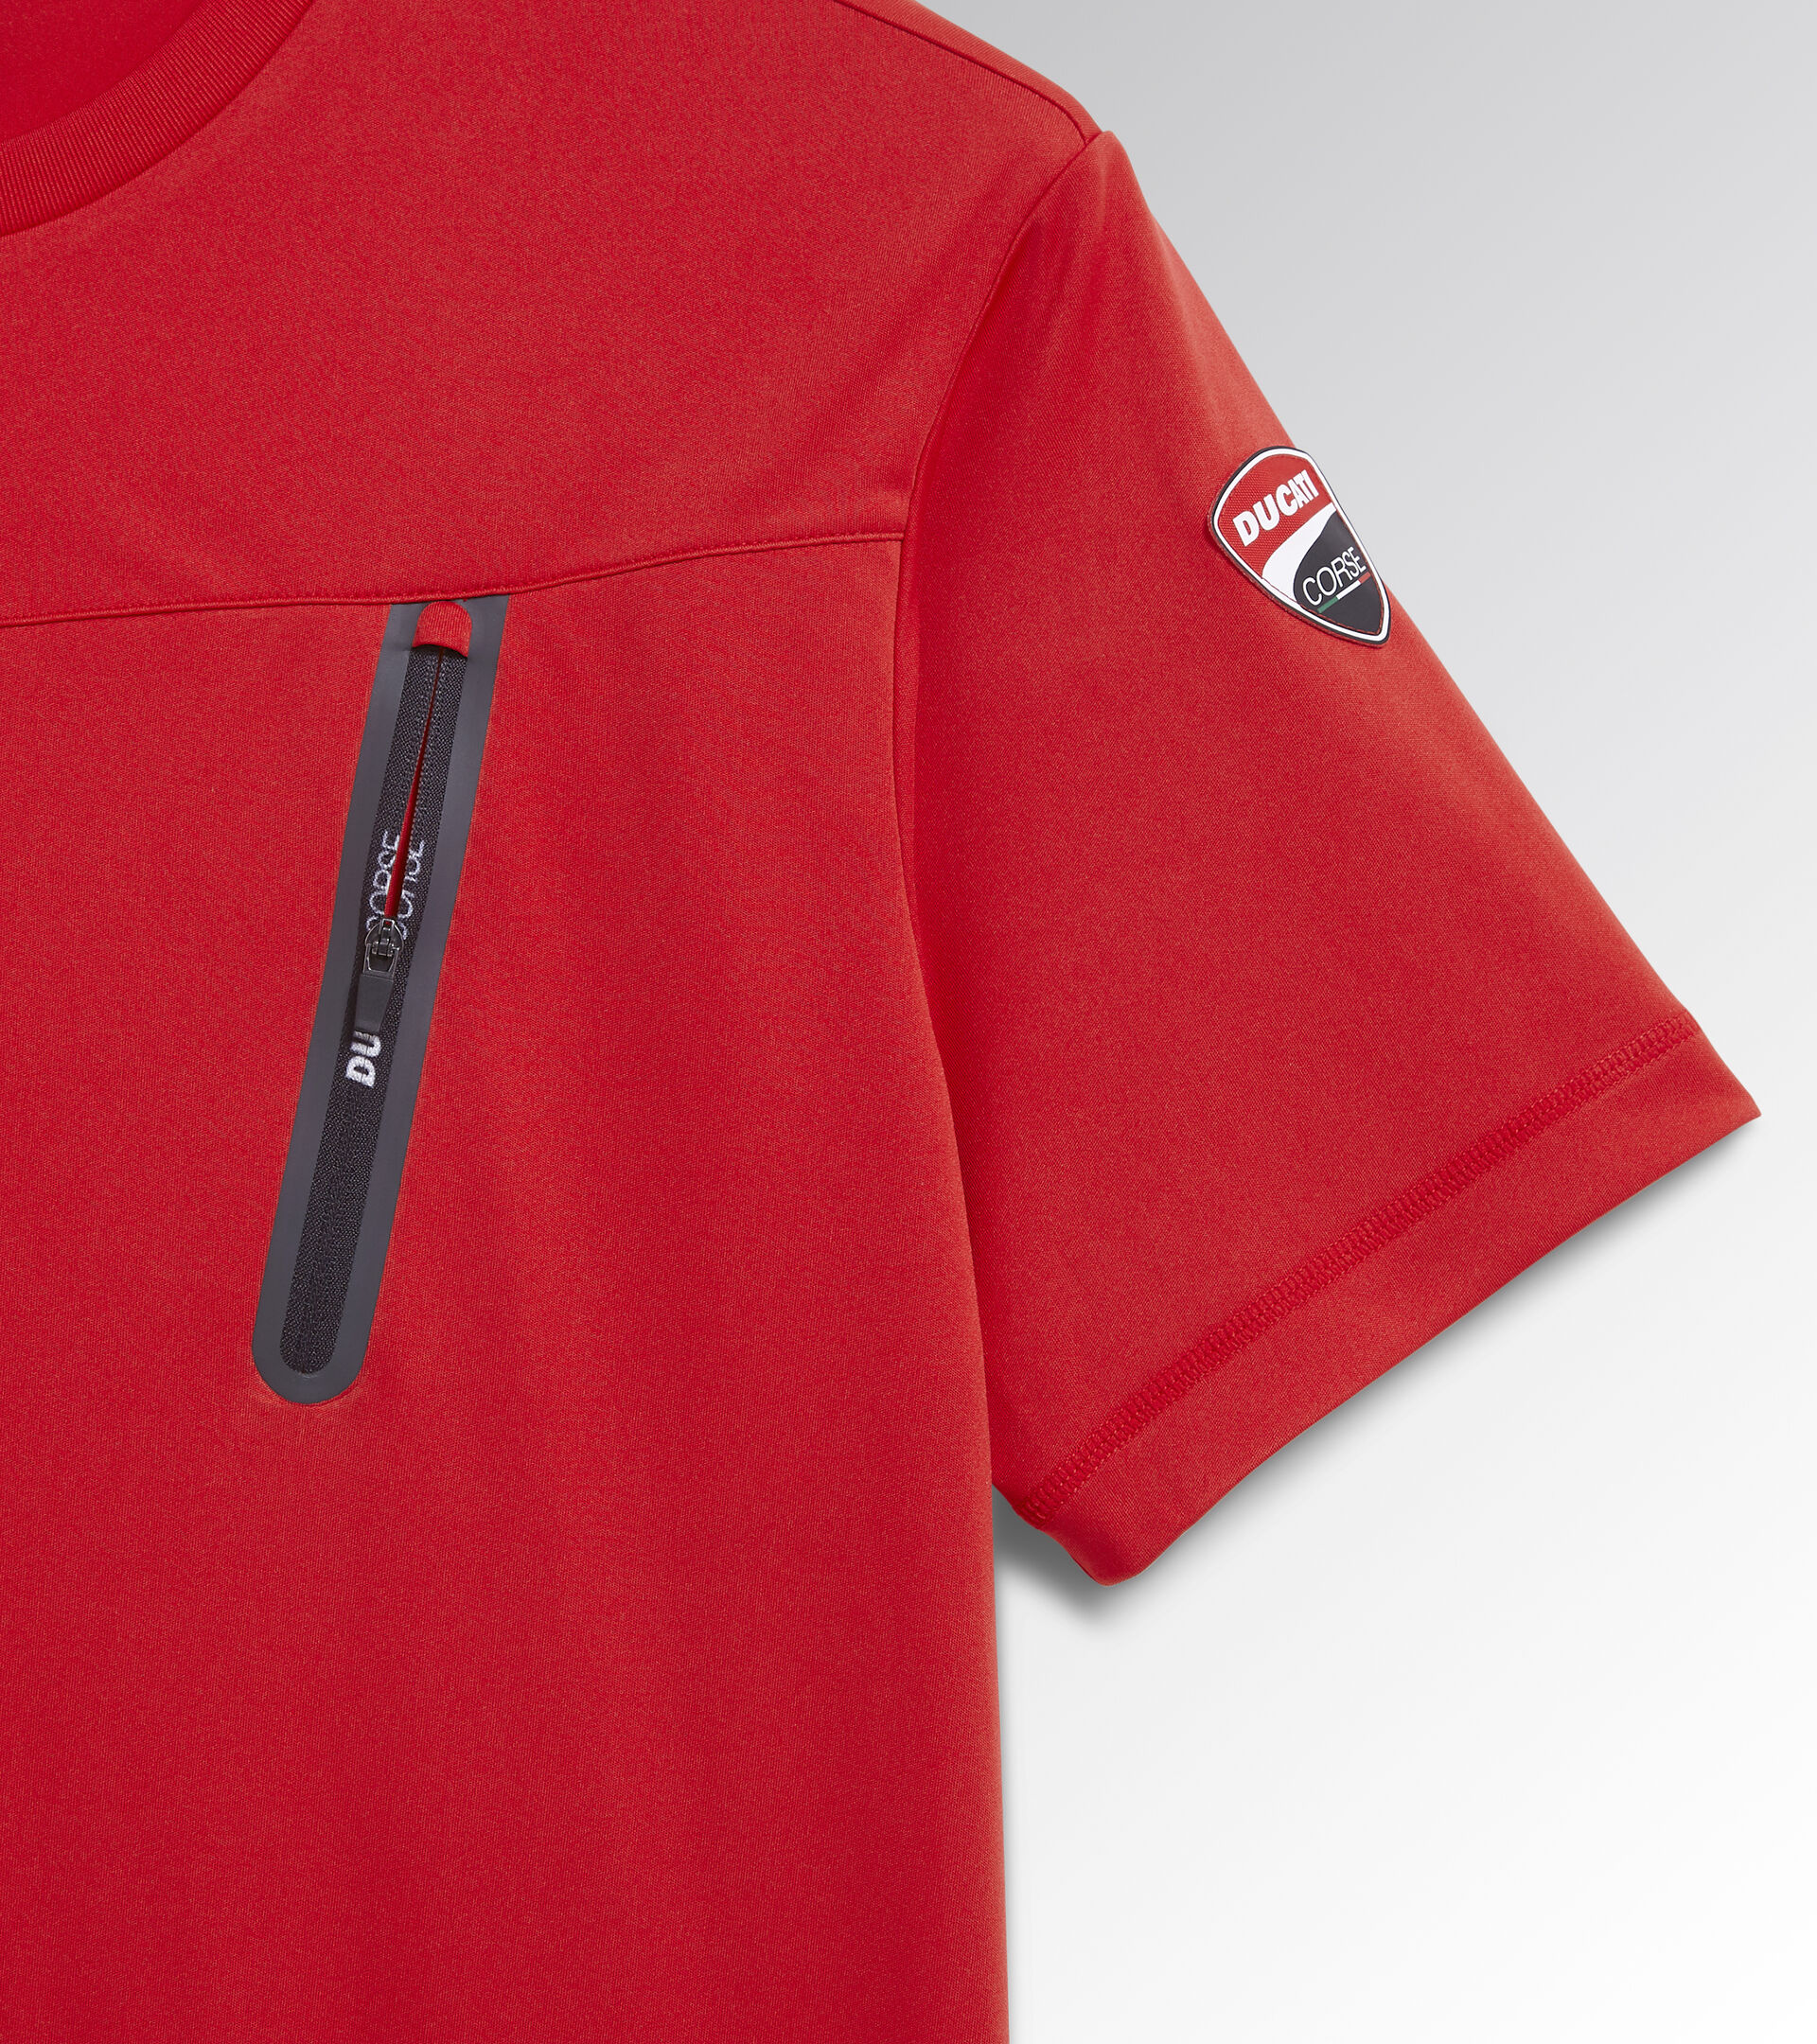 Short-sleeved T-shirt - Diadora Utility x Ducati Corse T-SHIRT PLUS DUCATI DUCATI MGP RED - Utility